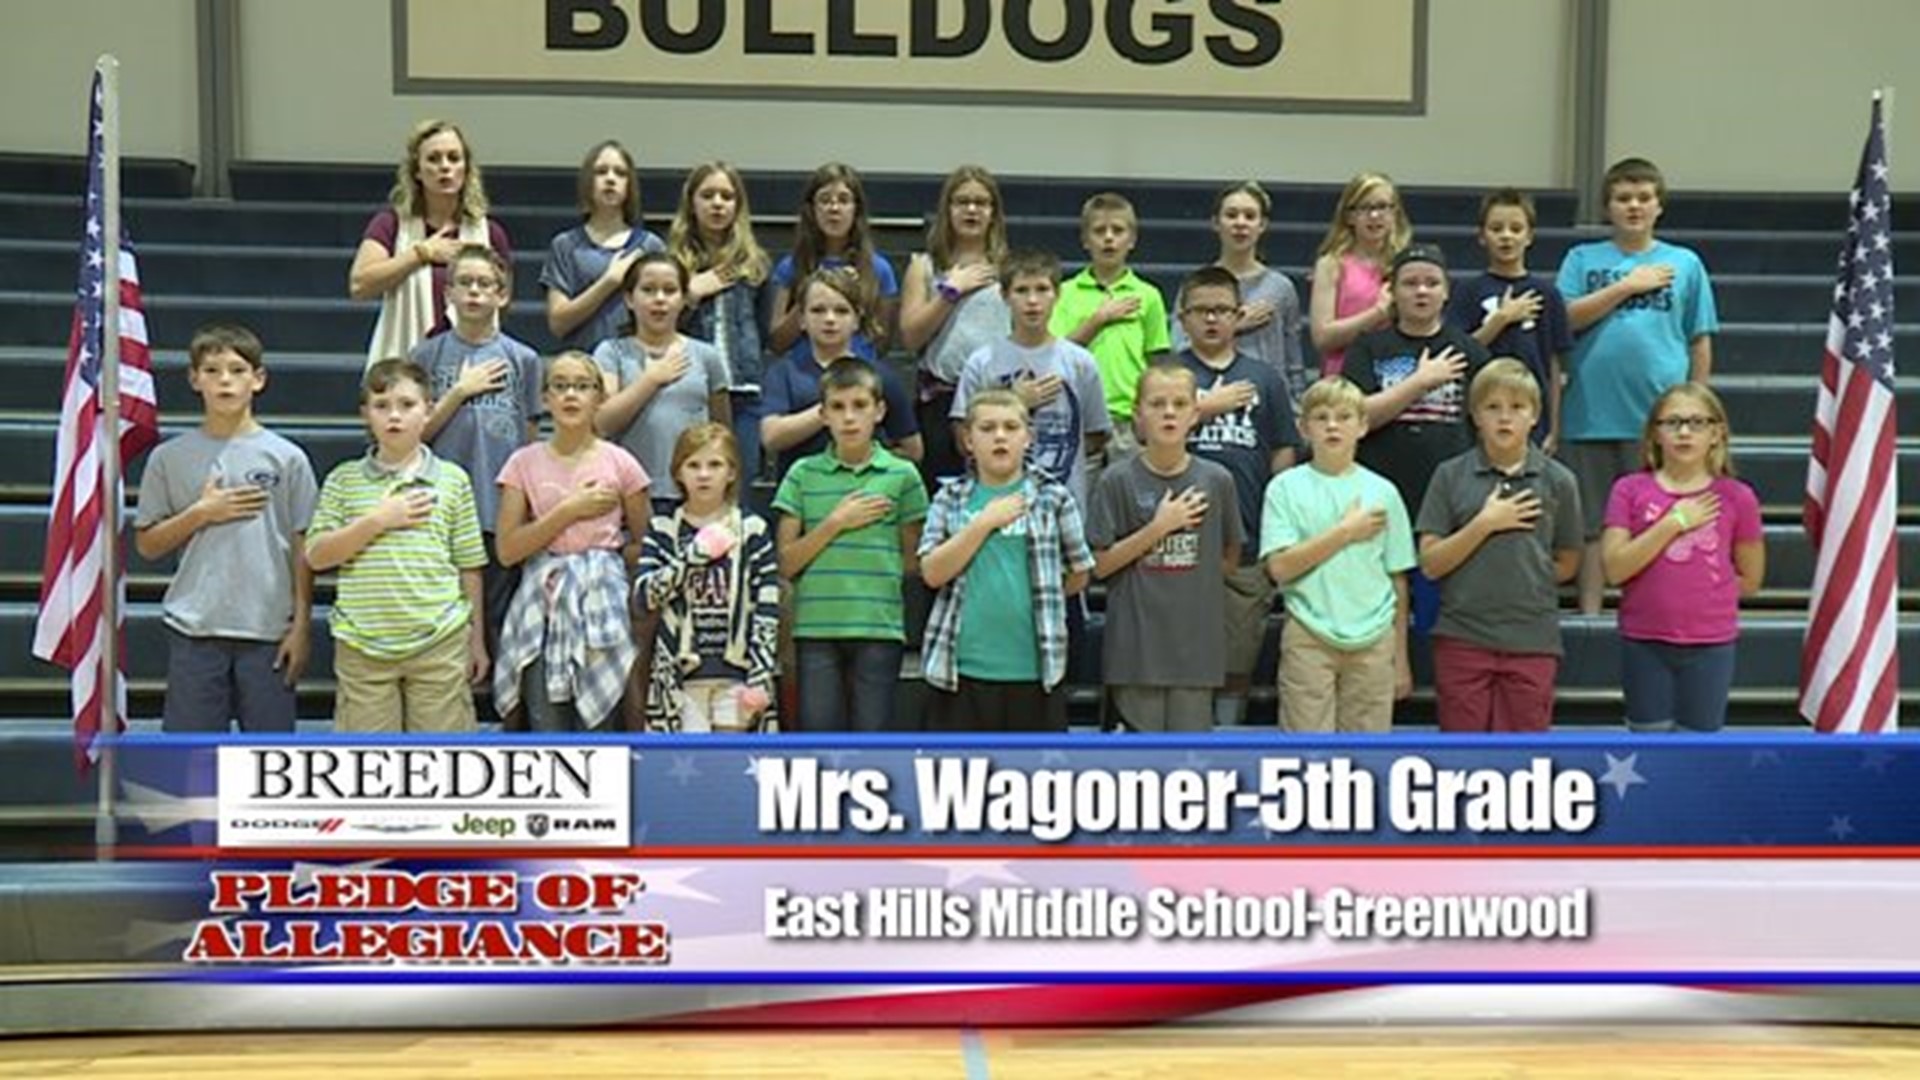 East Hills Middle School, Greenwood - Mrs. Wagoner - 5th Grade